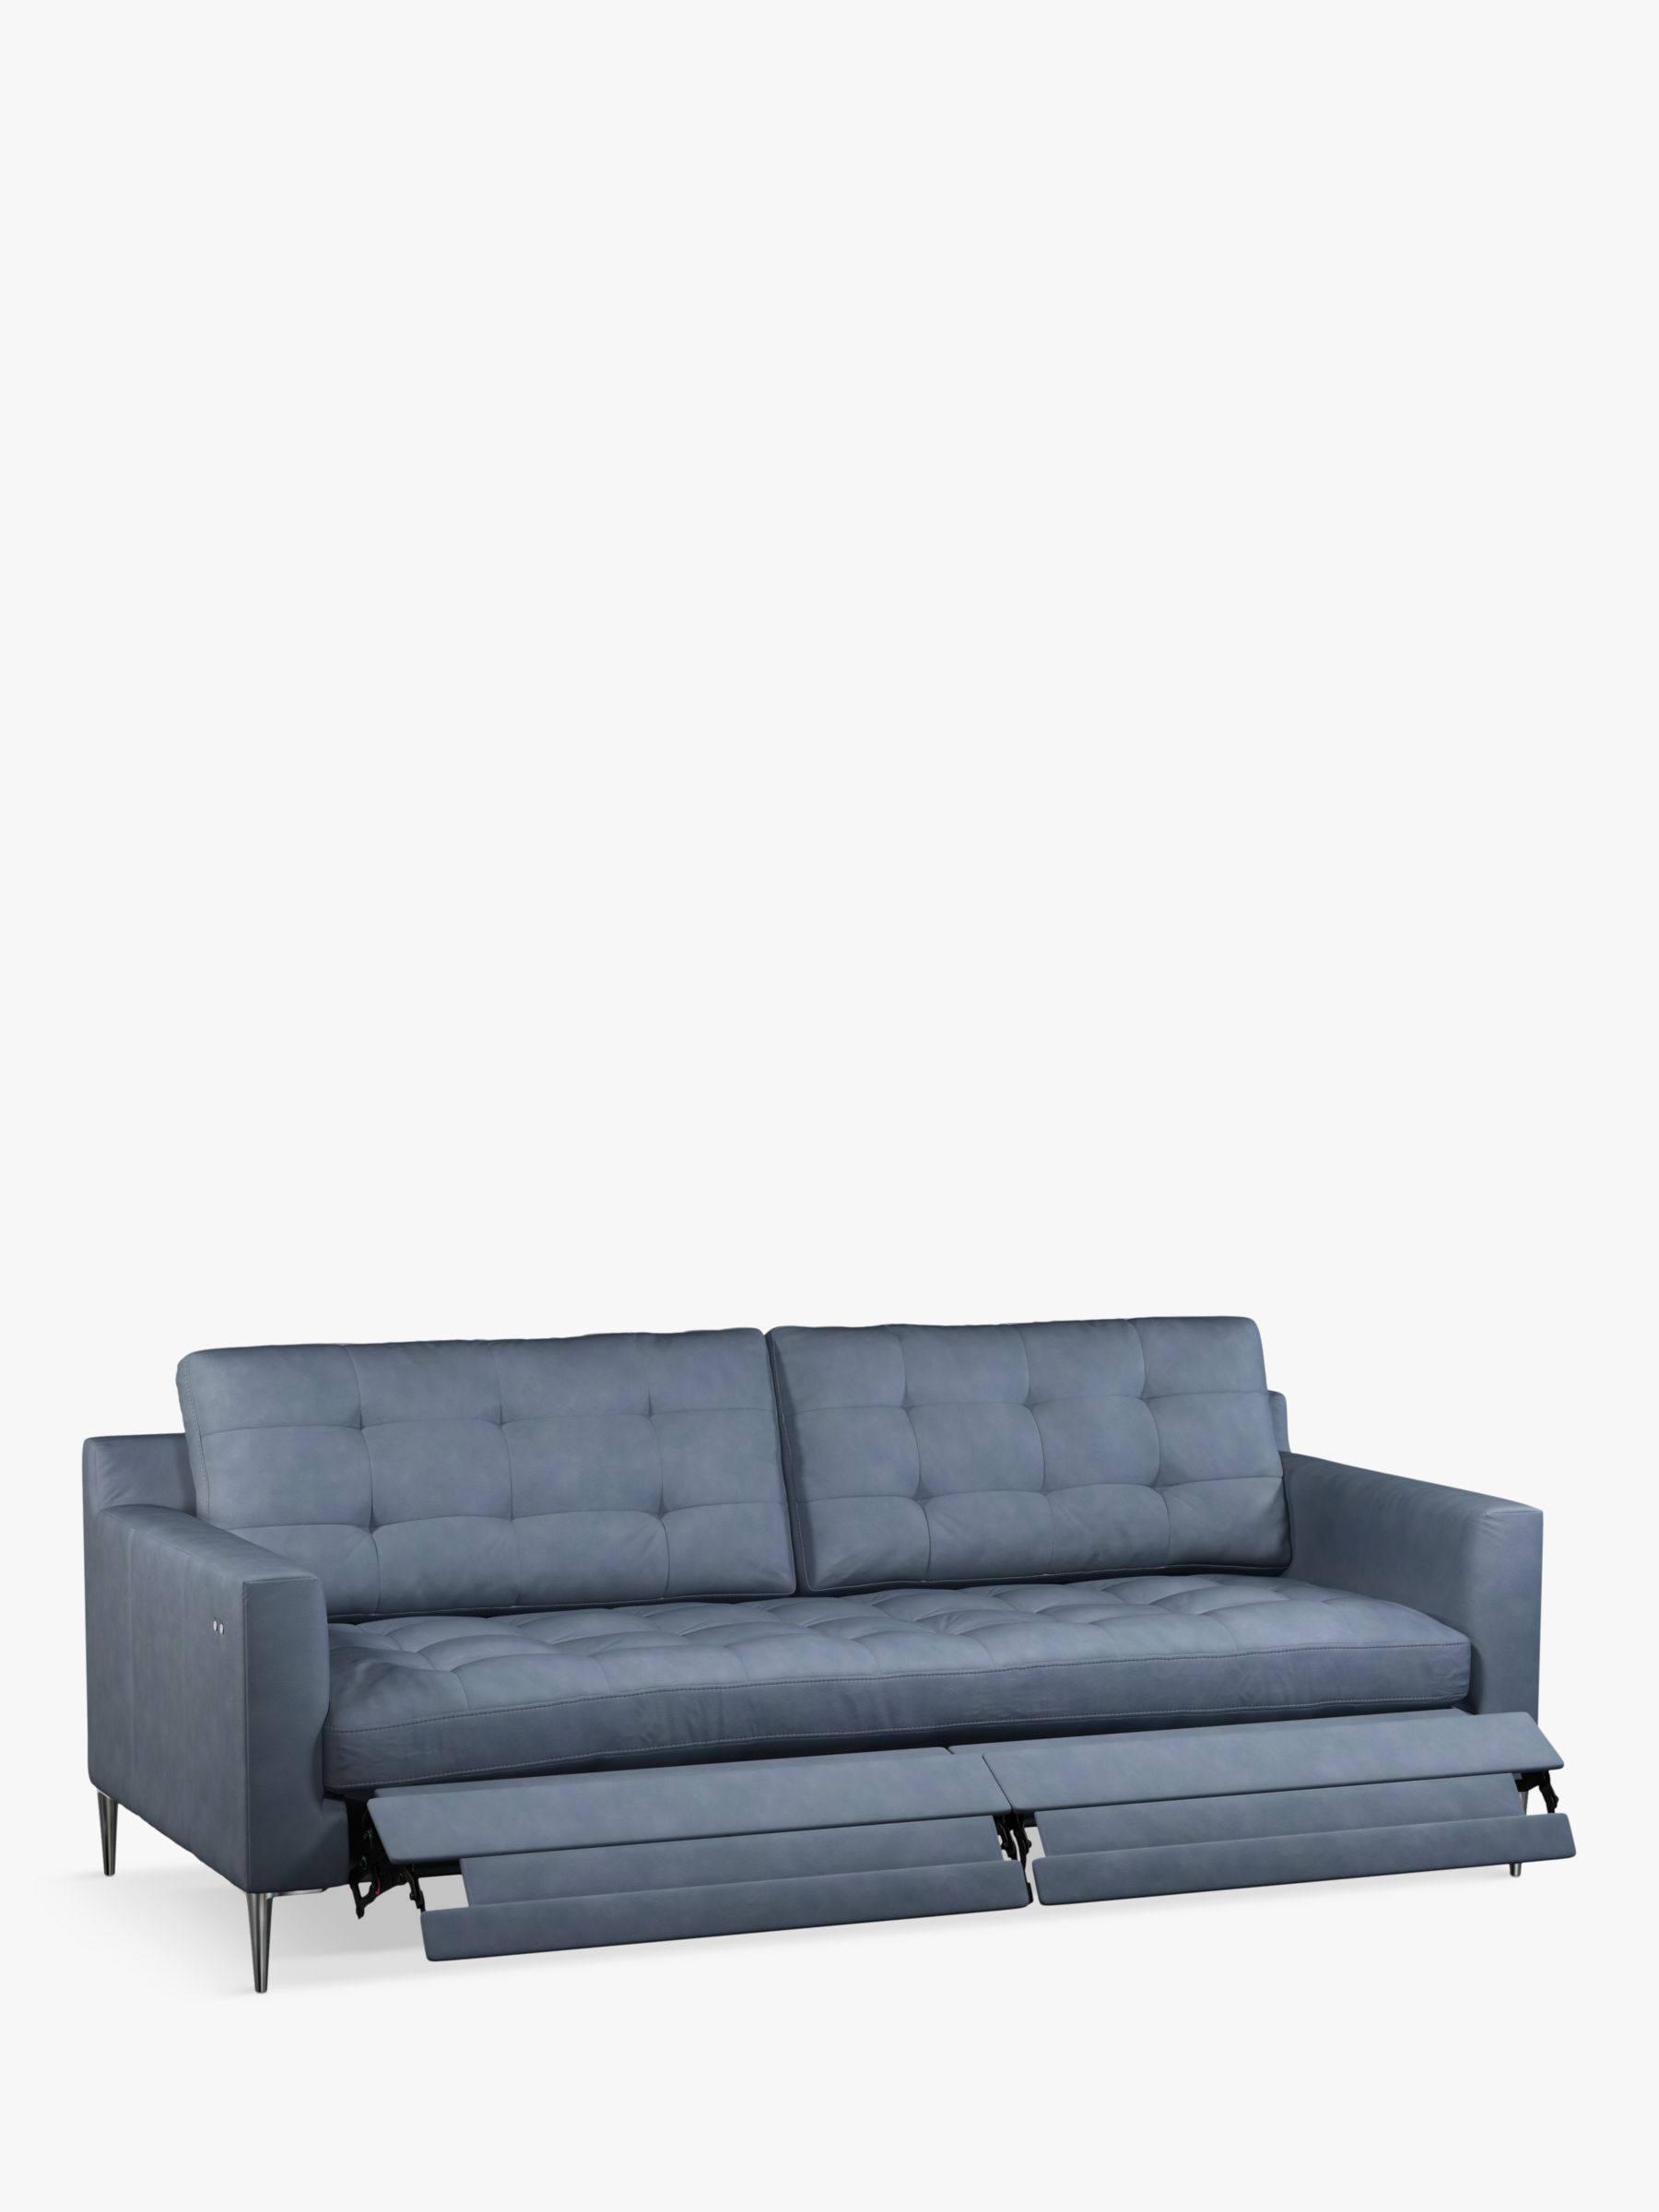 Draper Range, John Lewis Draper Motion Large 3 Seater Leather Sofa with Footrest Mechanism, Metal Leg, Soft Touch Blue